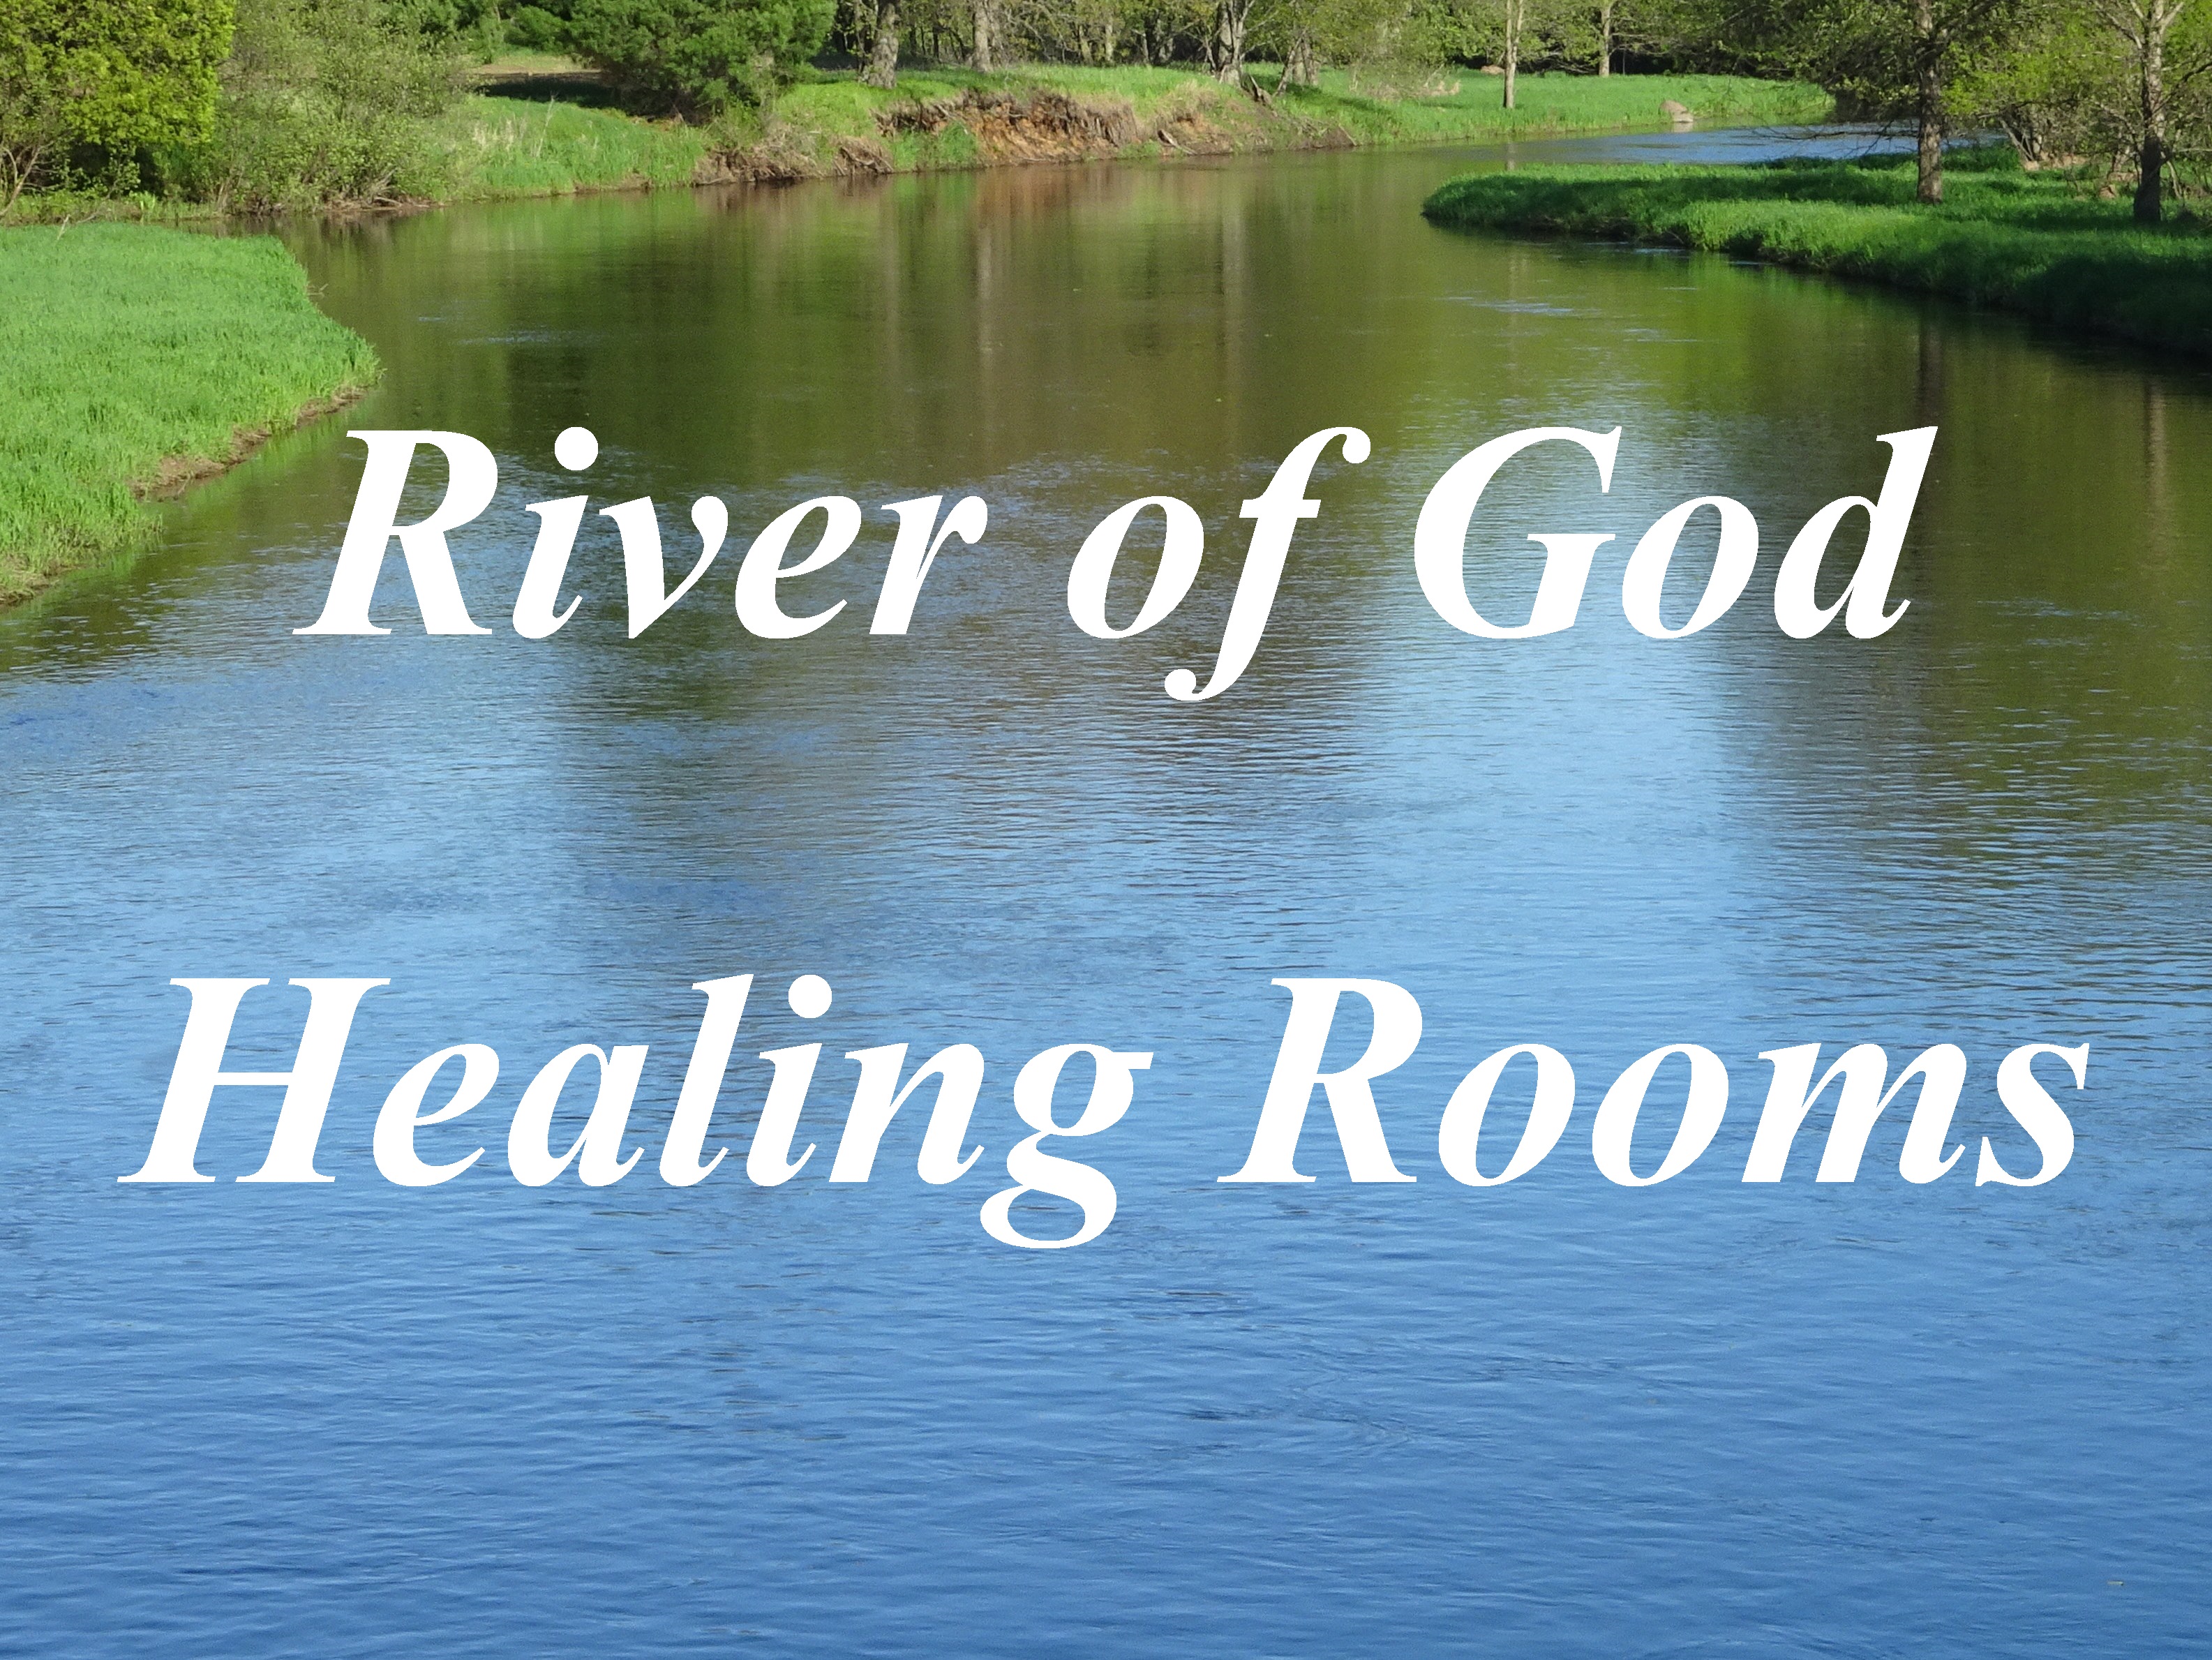 River of God Healing Rooms